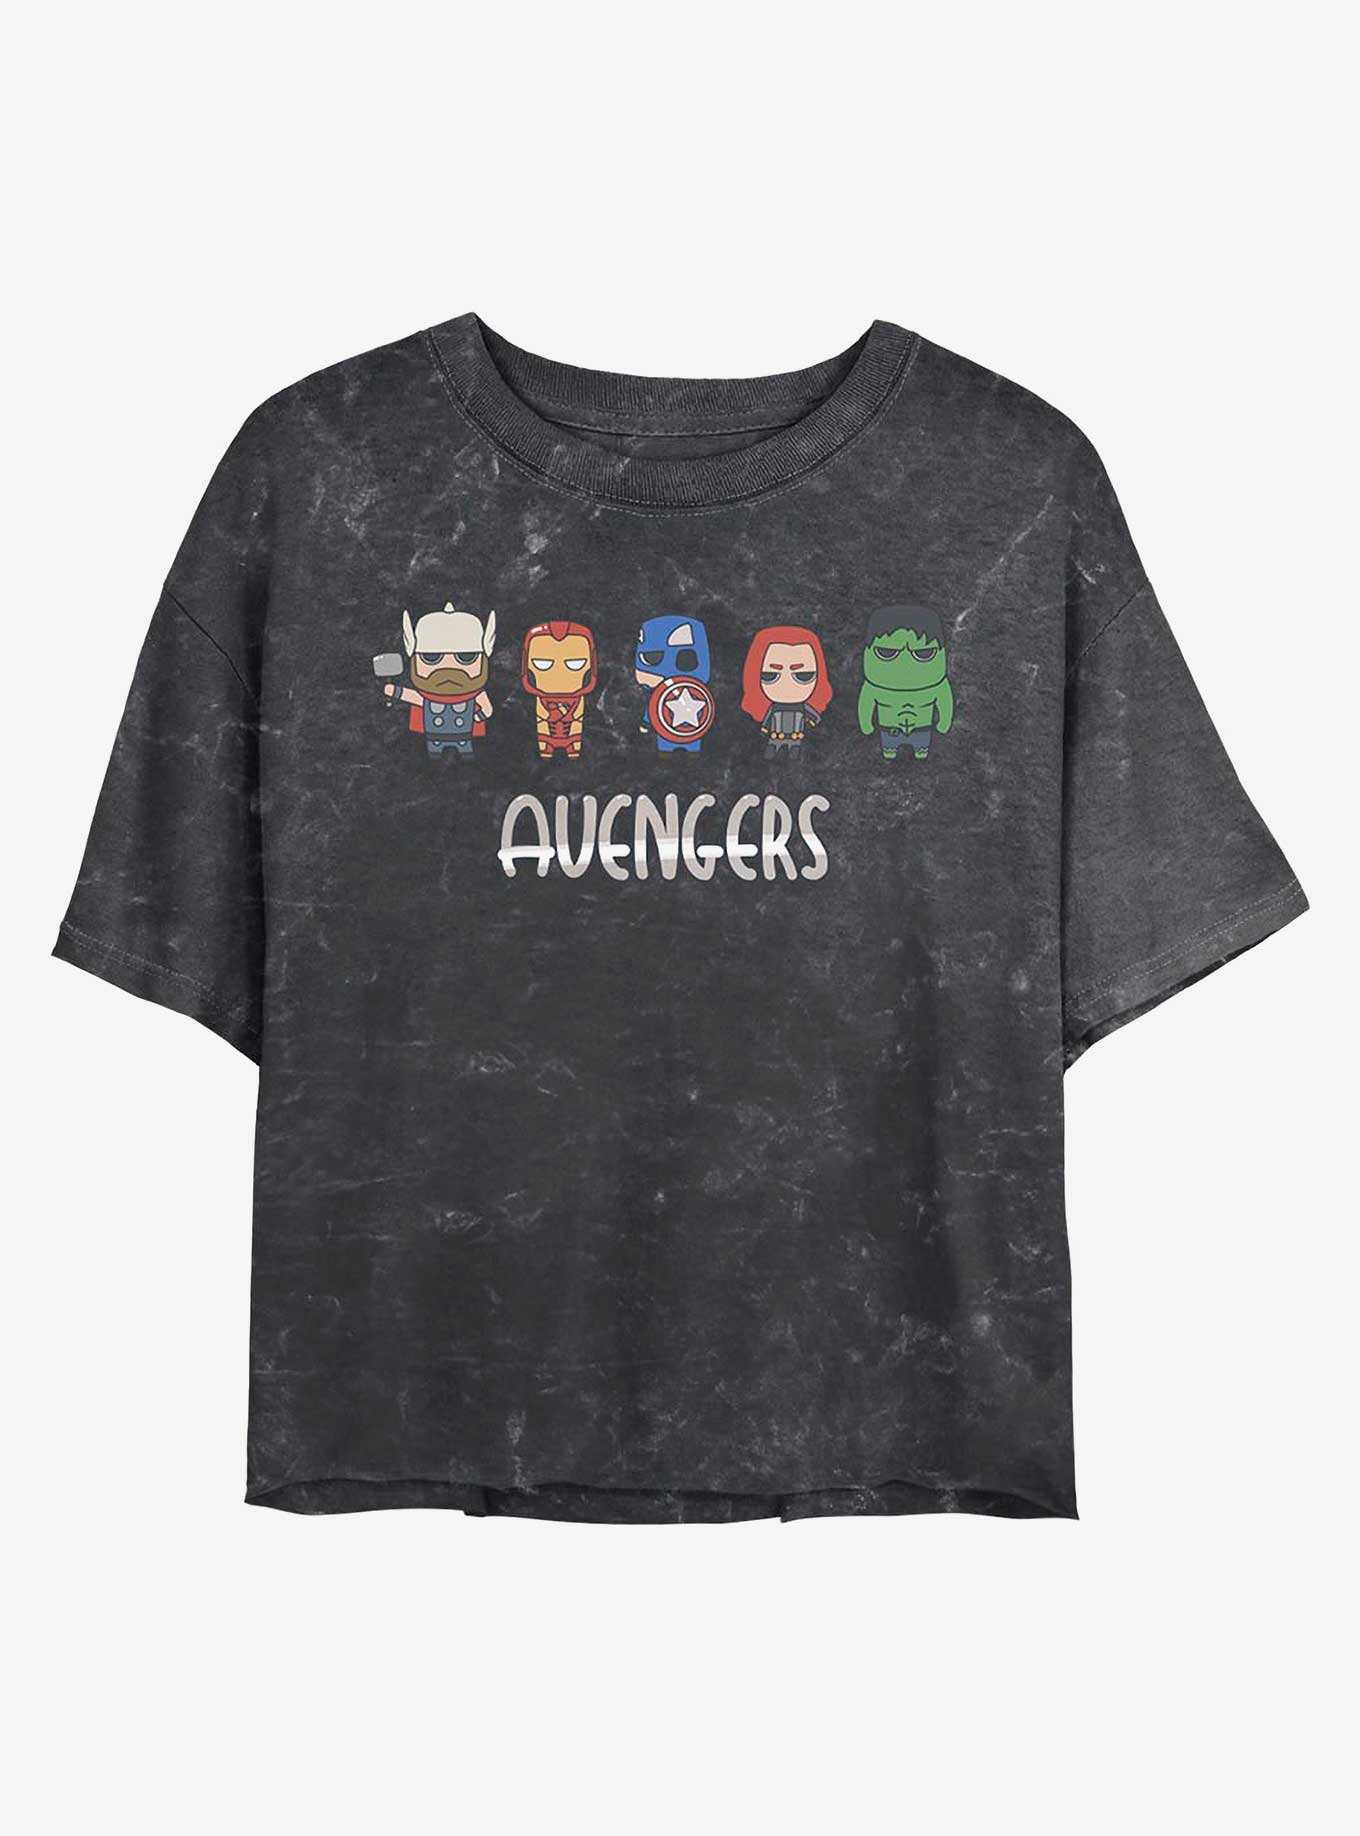 Universe Avengers OFFICIAL Merchandise Her Shirts & |